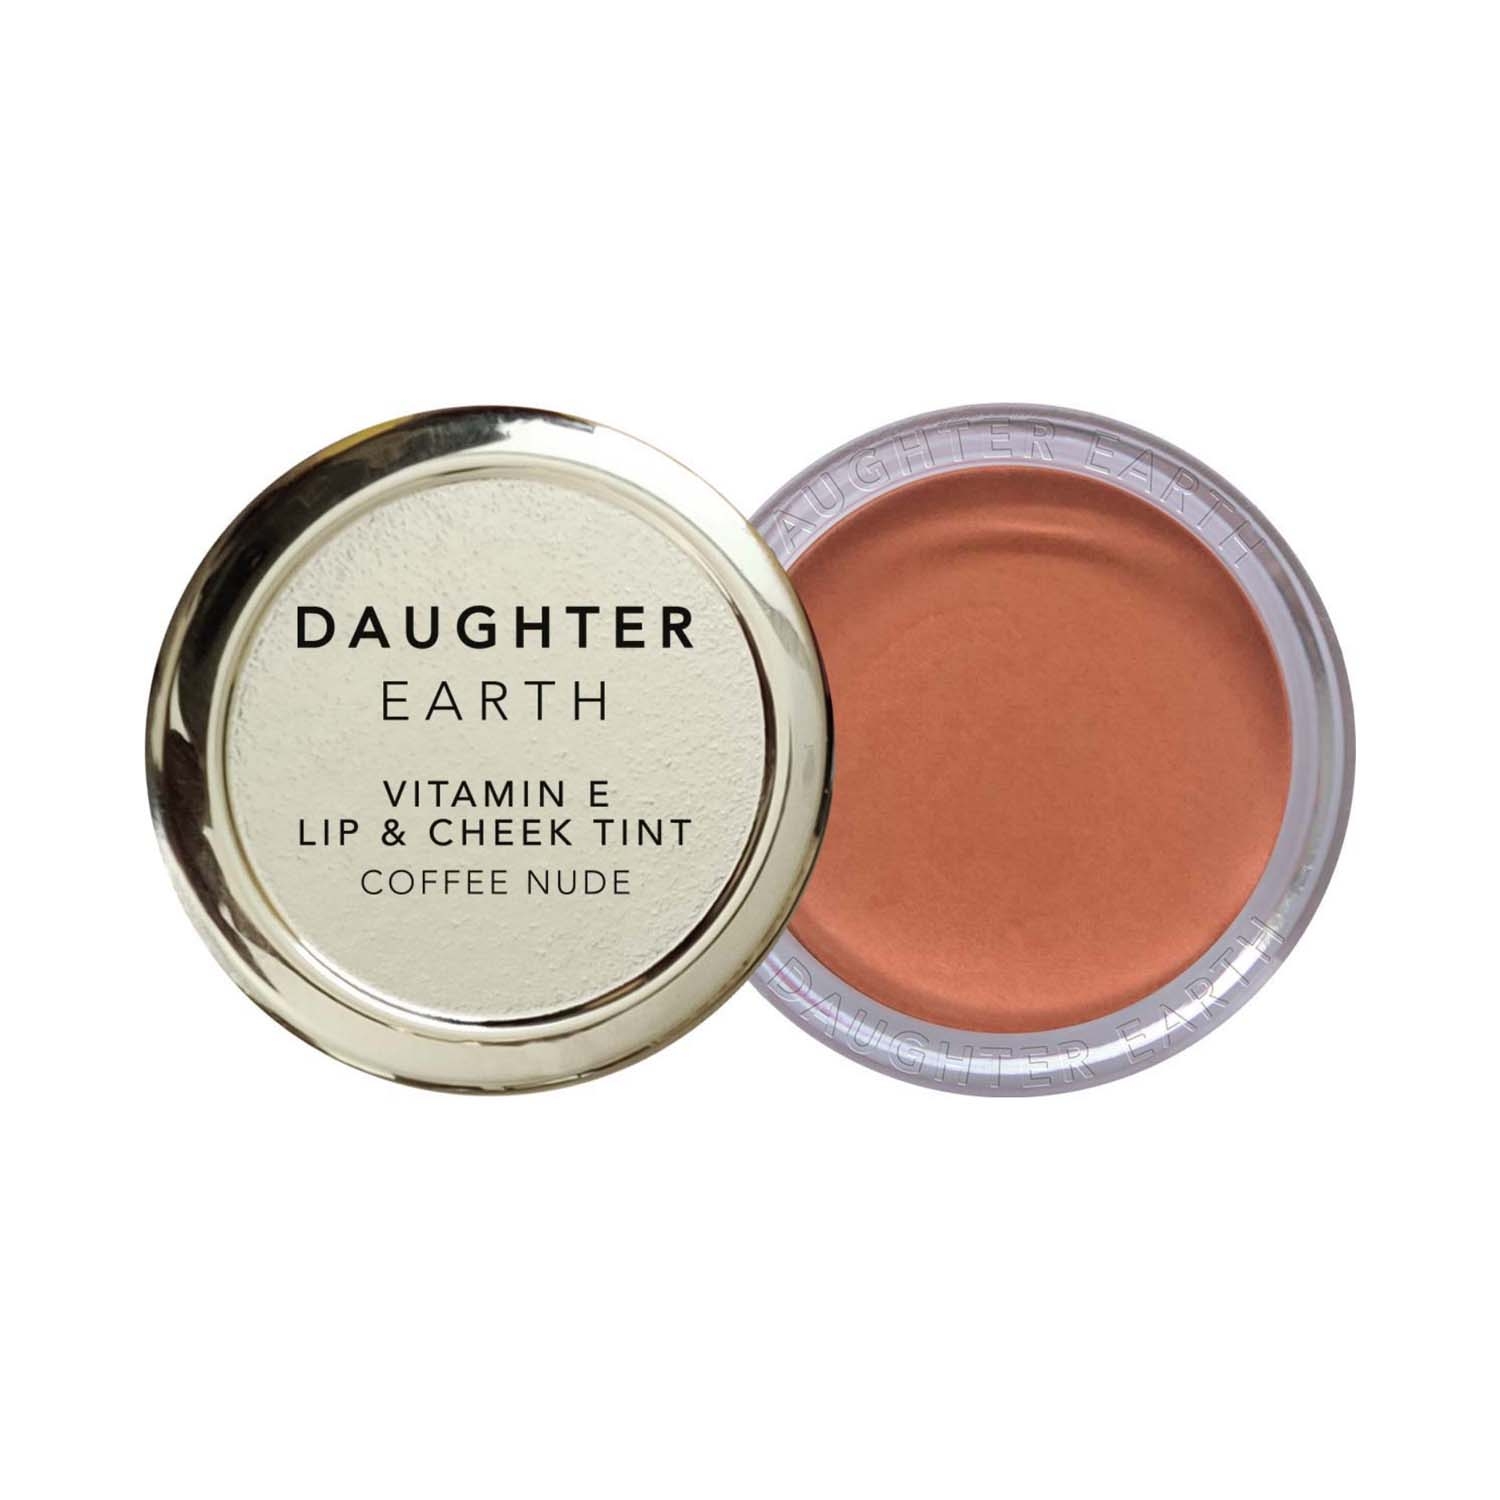 DAUGHTER EARTH | DAUGHTER EARTH Vitamin E Lip & Cheek Tint - Coffee Nude (4.5g)